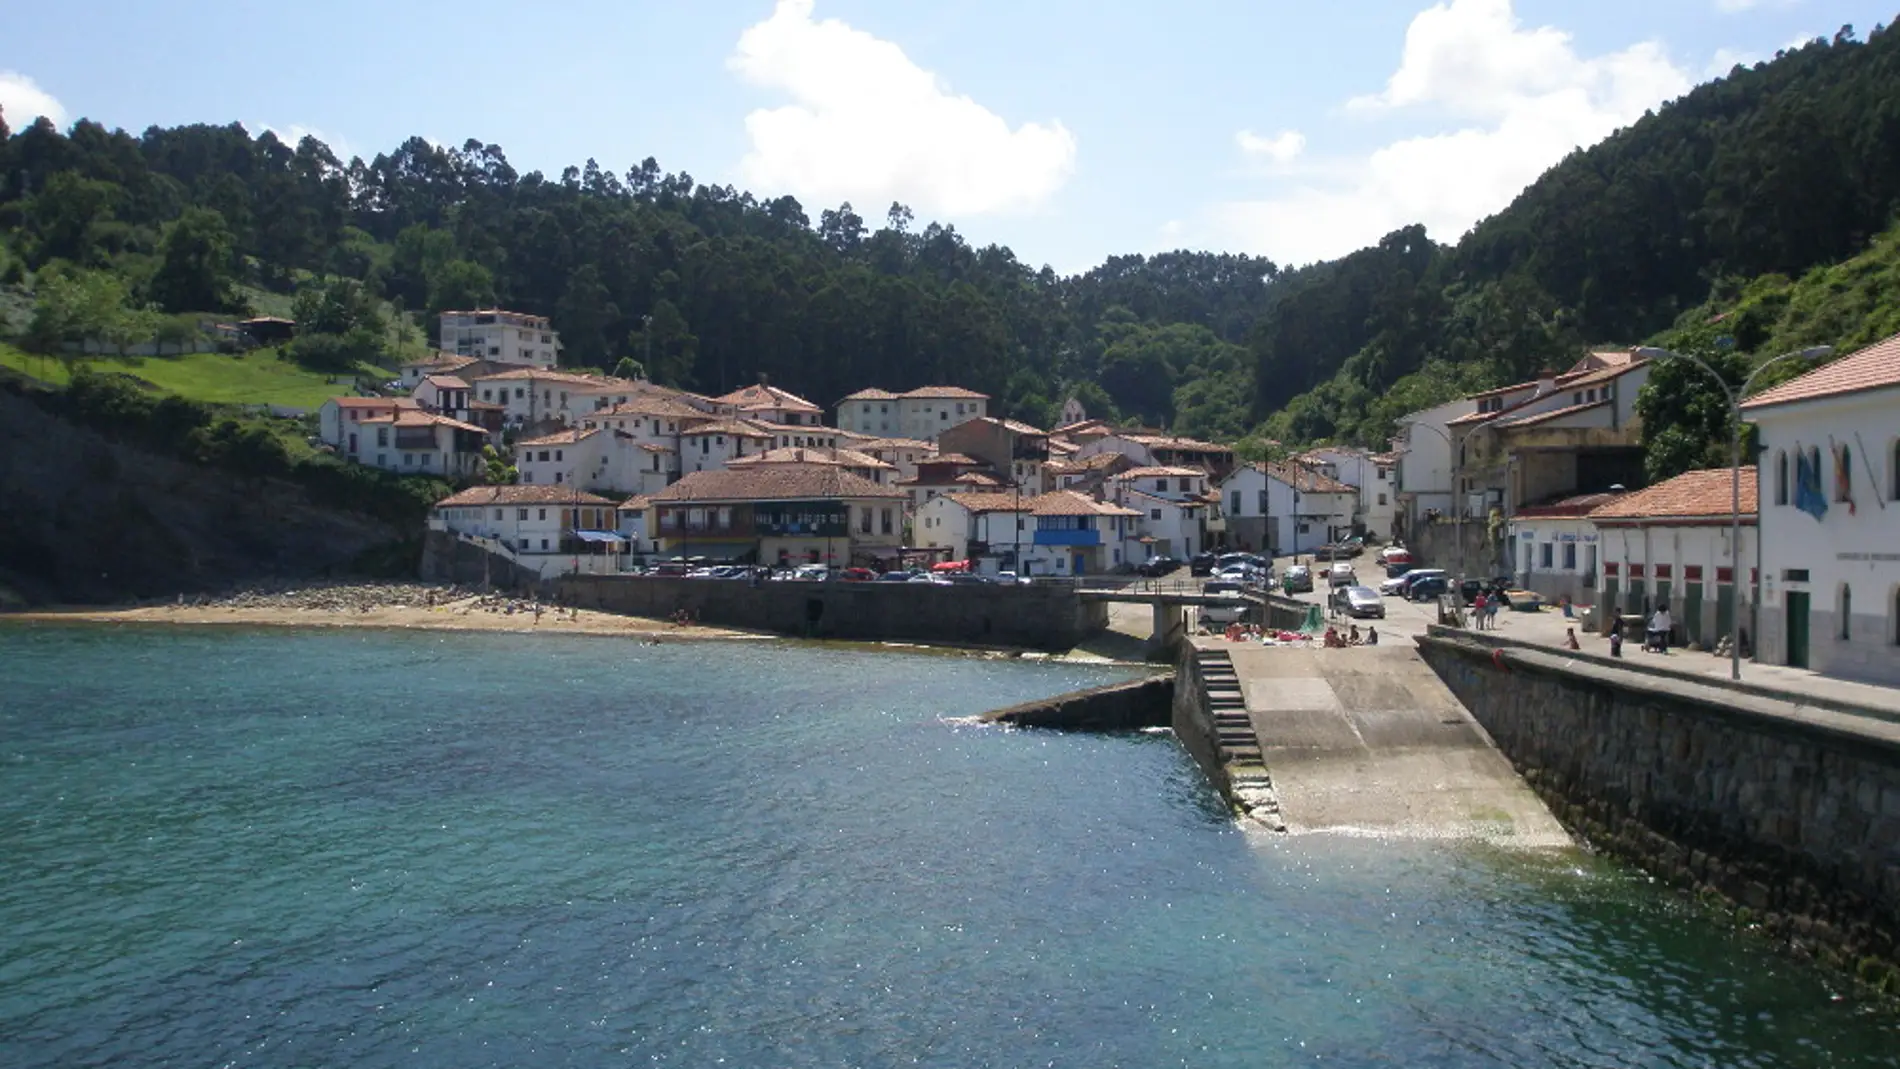 Puerto de Tazones (Asturias) title=